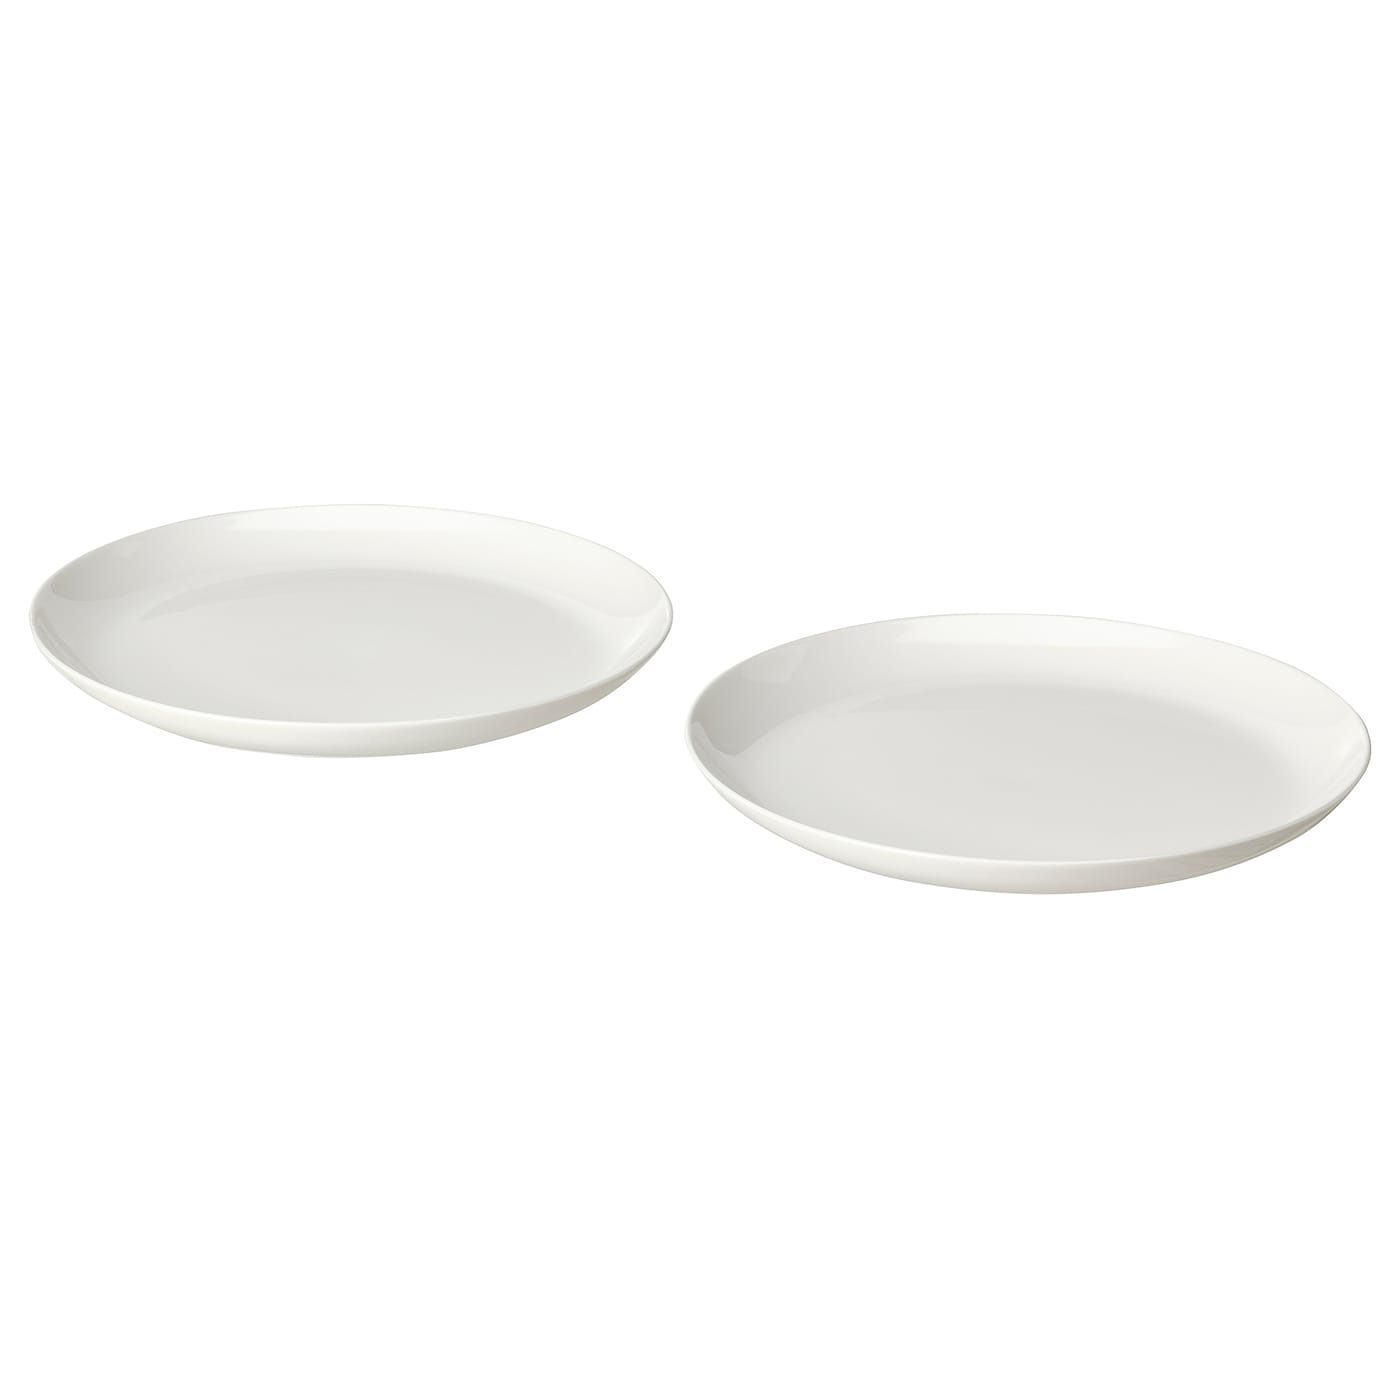 Набор тарелок, 2 шт. - IKEA FRÖJDEFULL/FROJDEFULL, 25 см, белый, ФРЁЙДЕФУЛЛ ИКЕА